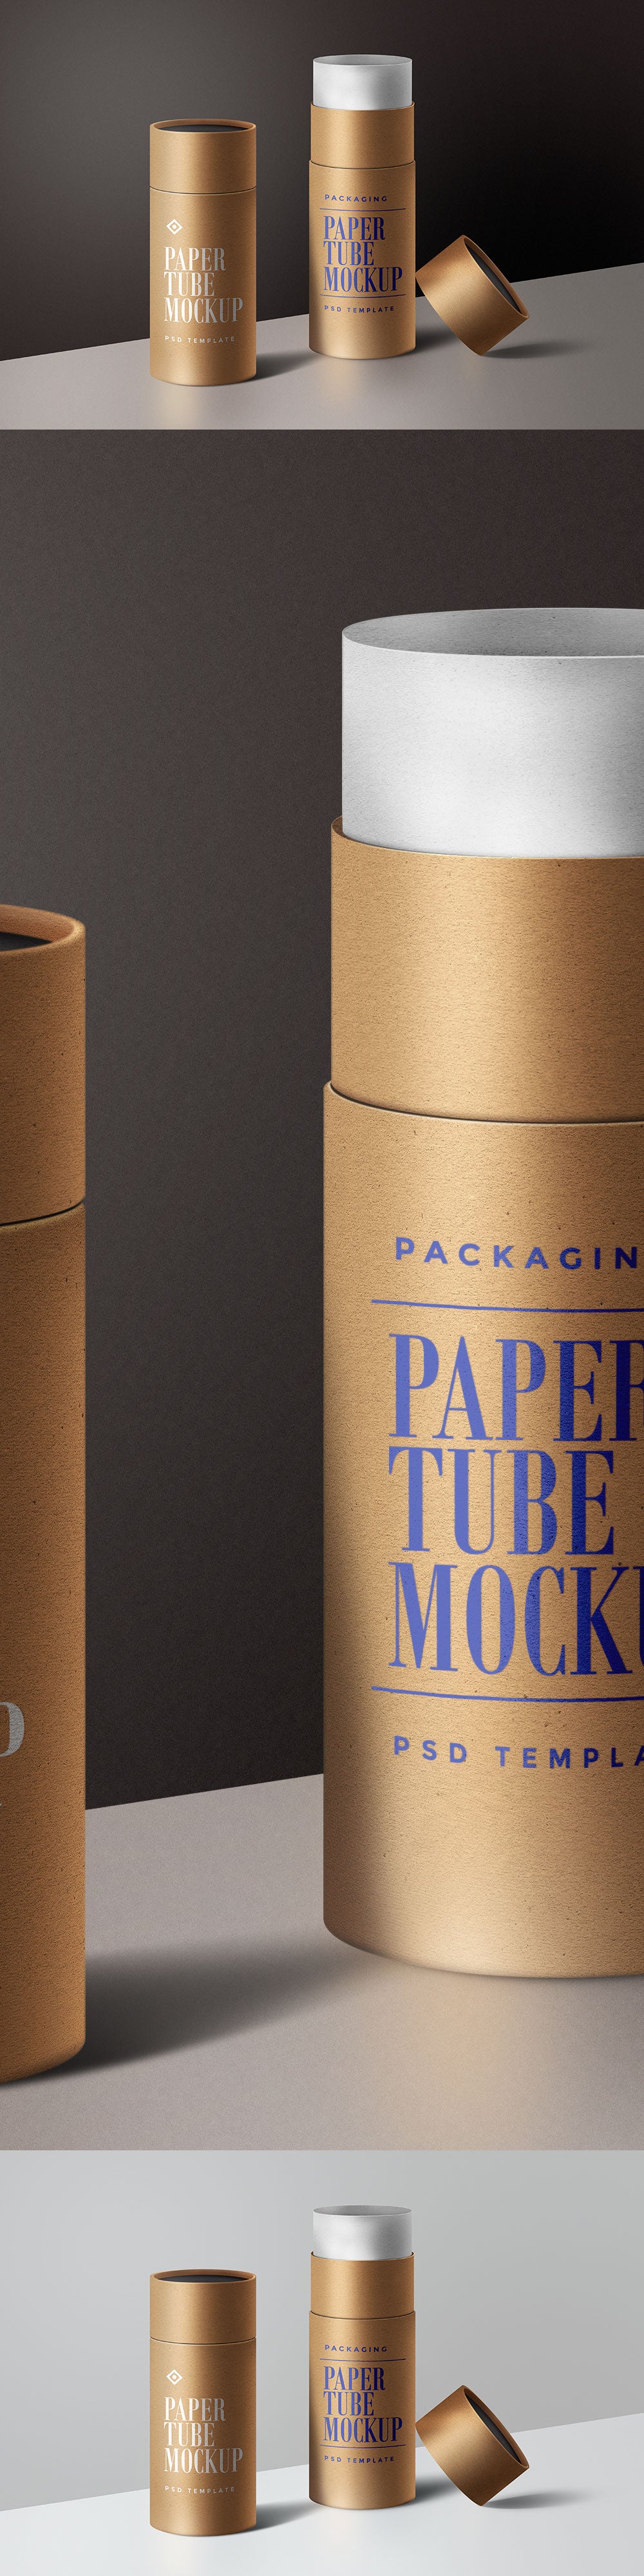 Download Free Paper Tube Packaging Mockup Template - CreativeBooster